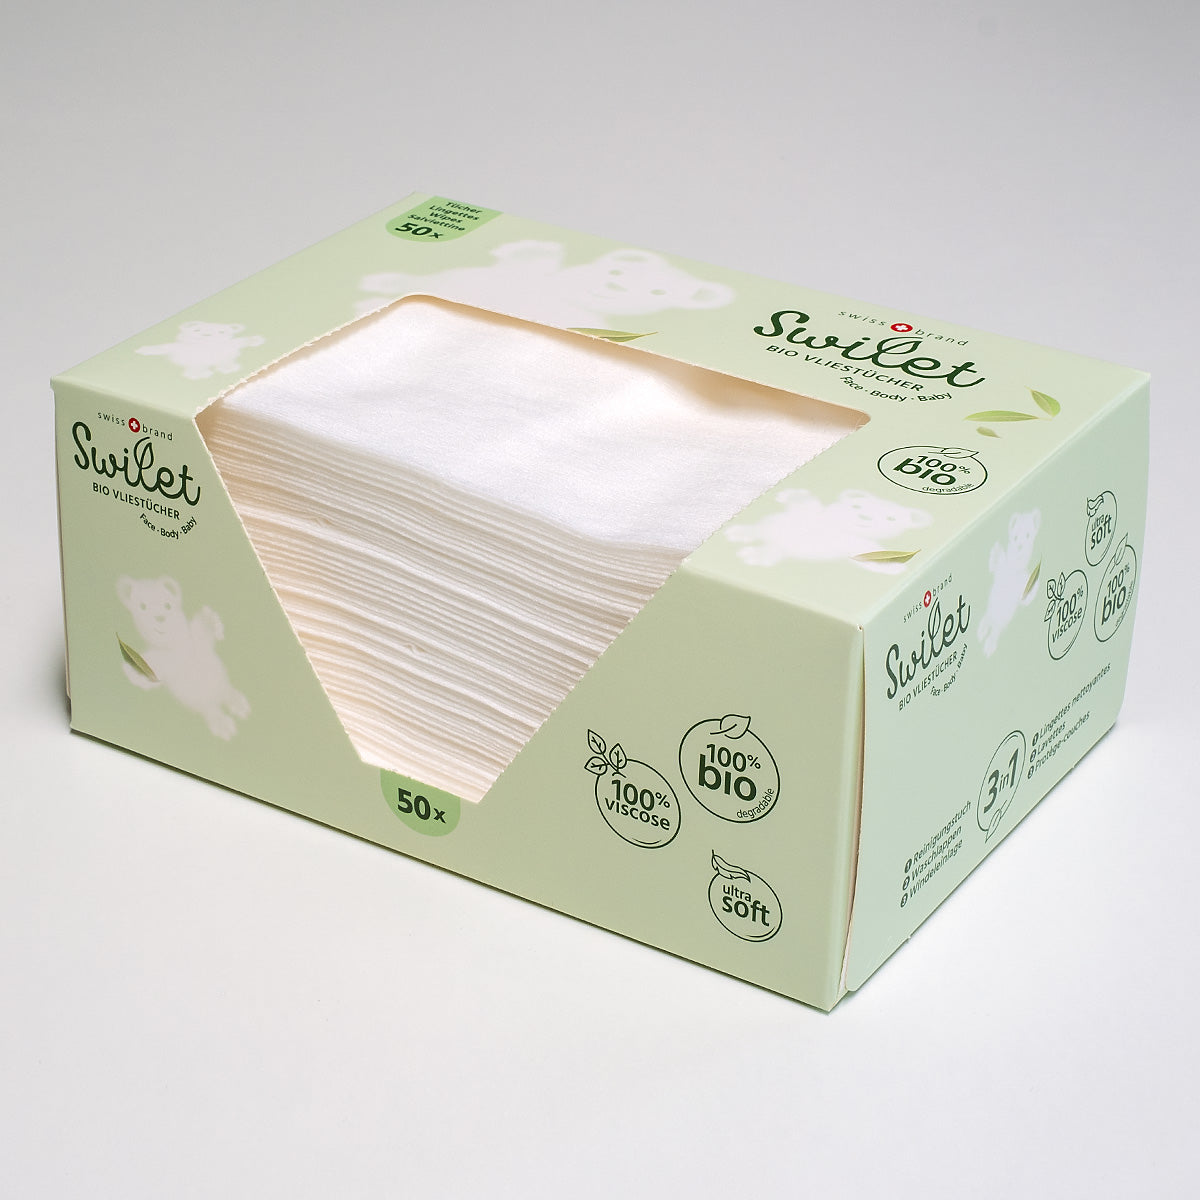 Swilet Vliestücher - Windeleinlagen Bio Karton (3x 12 x 50 STK) AKTION 3 Karton